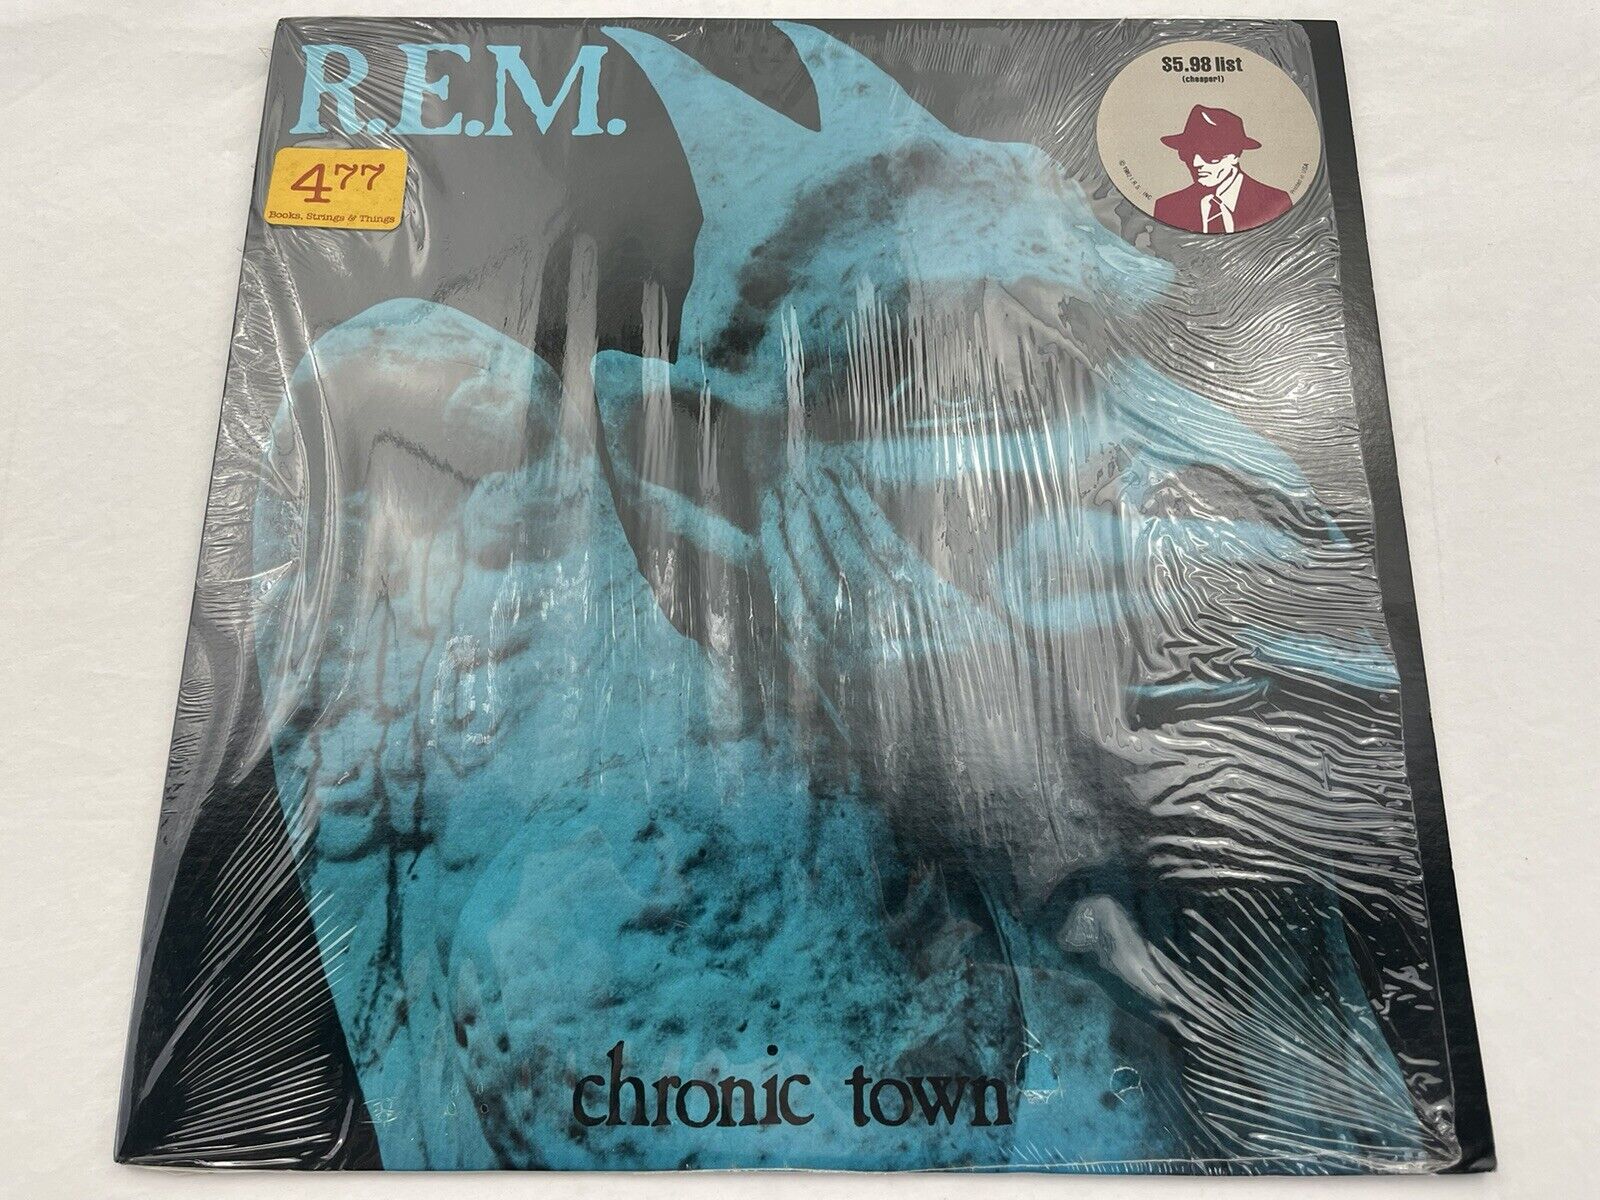 REM - Chronic Town Vinyl LP 1982 IRS International Record Syndicate SP-70502 EX